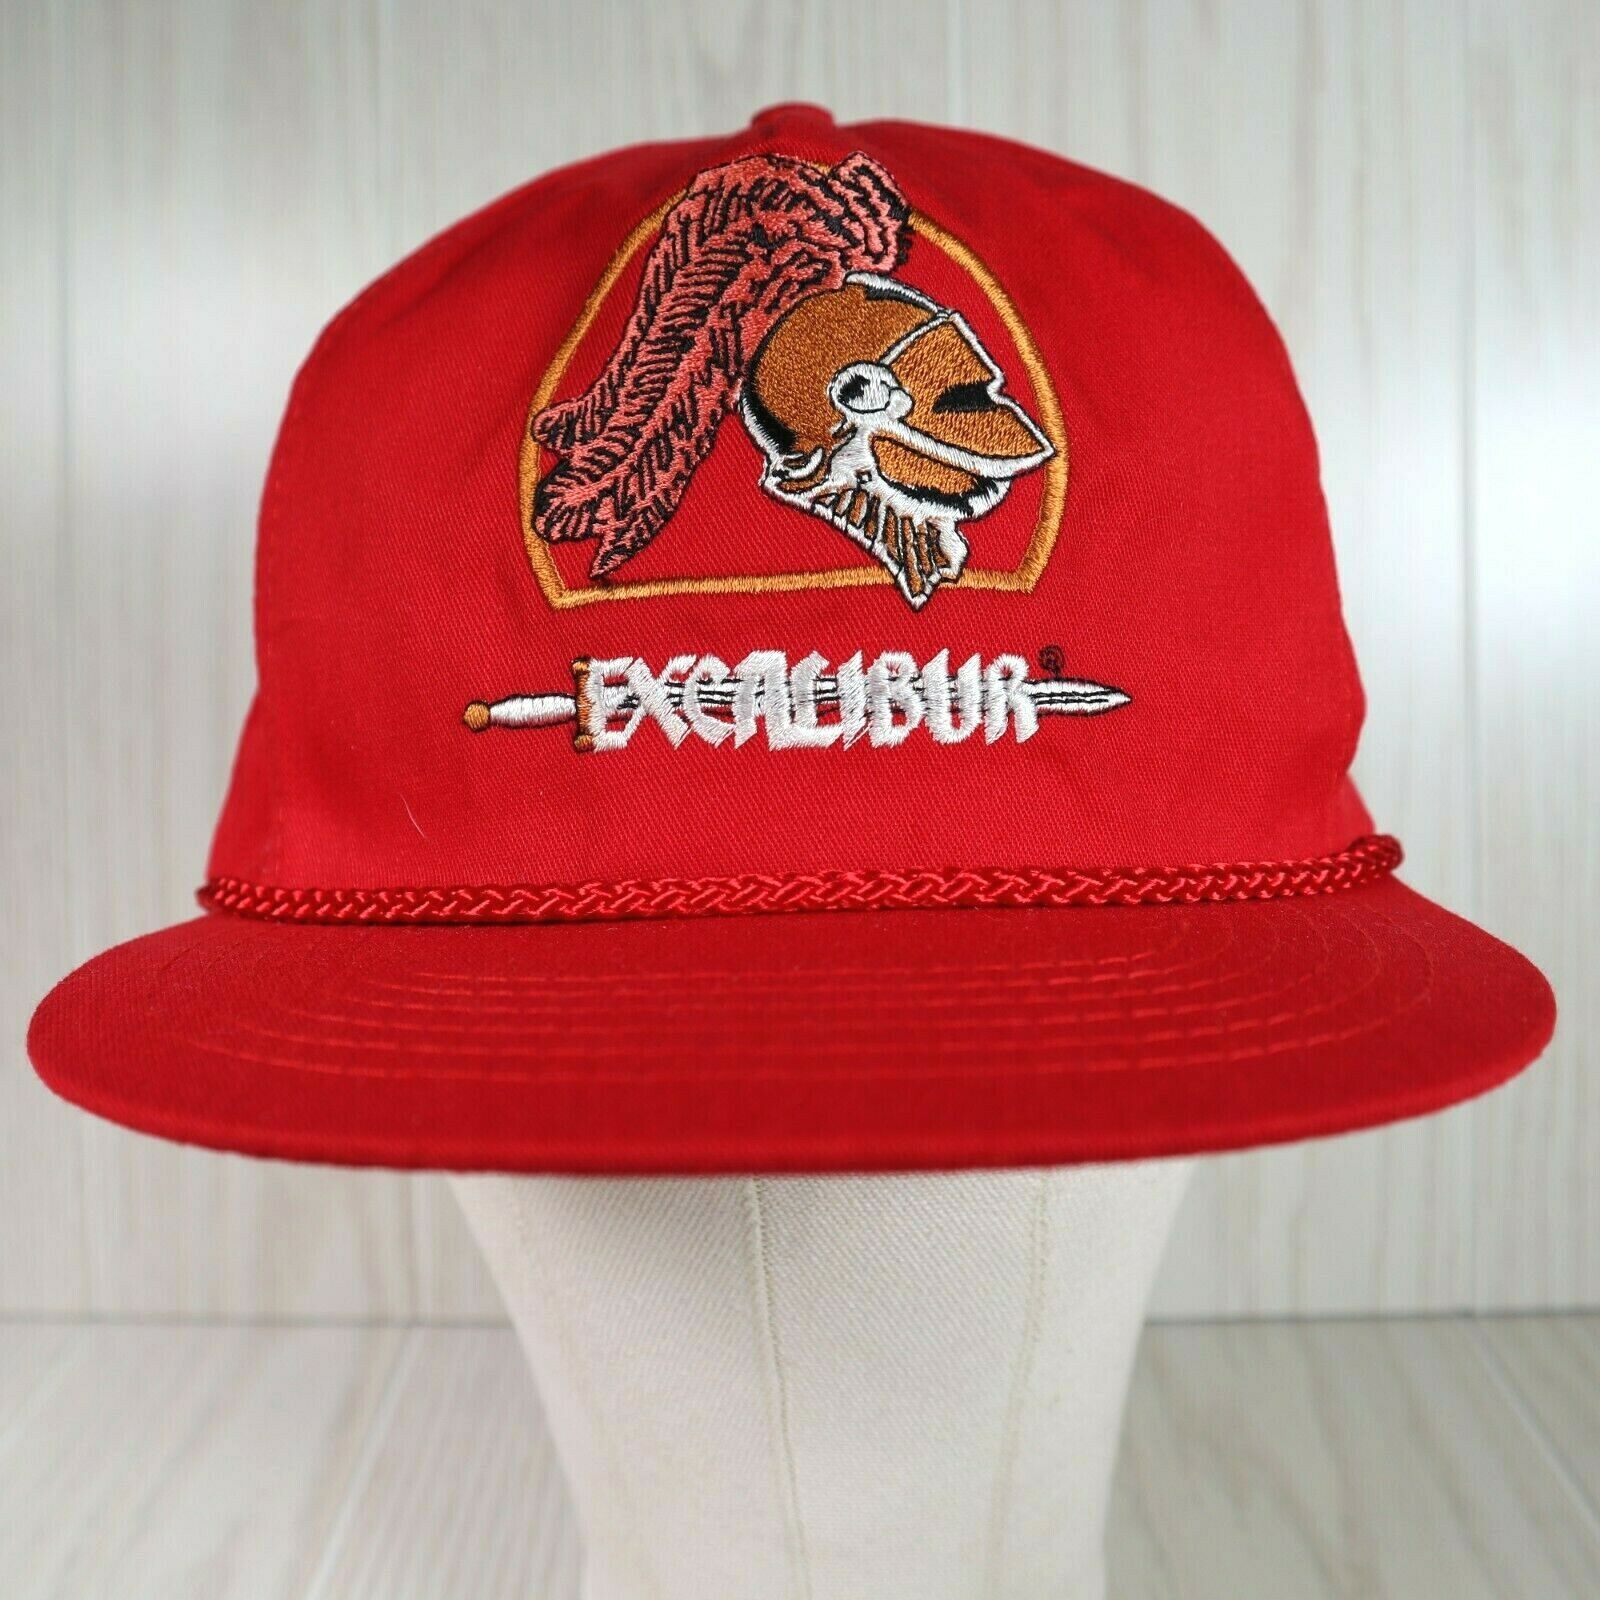 Vintage Excalibur Trucker Hat Cap Red Adjustable Strapback Embroidery